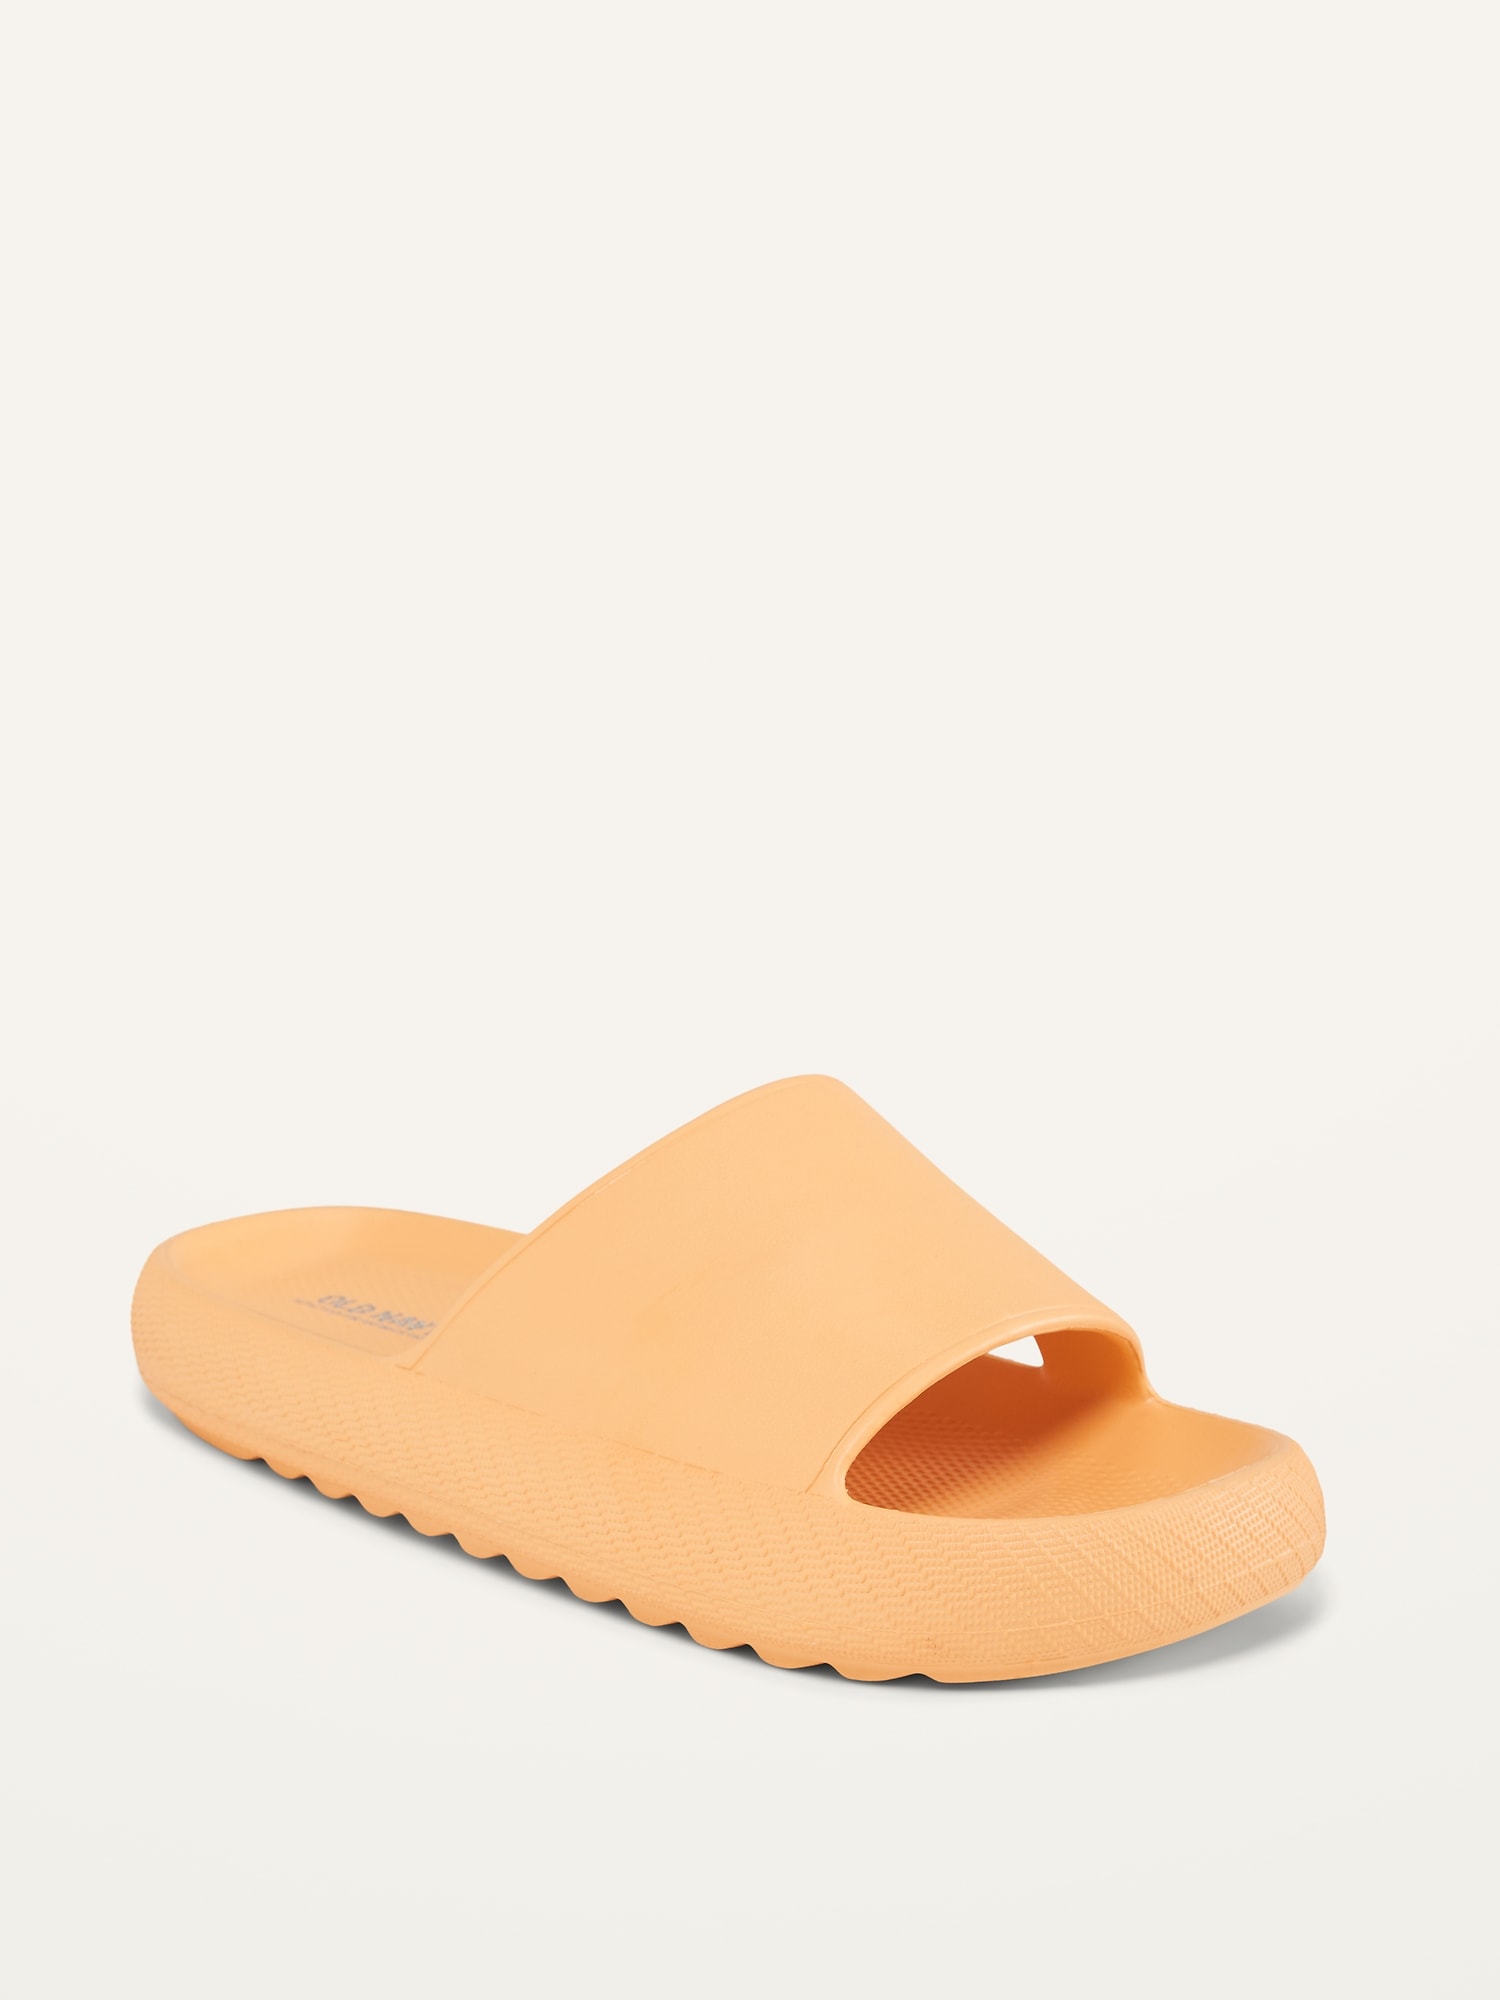 Slide Sandals (Partially Plant-Based)